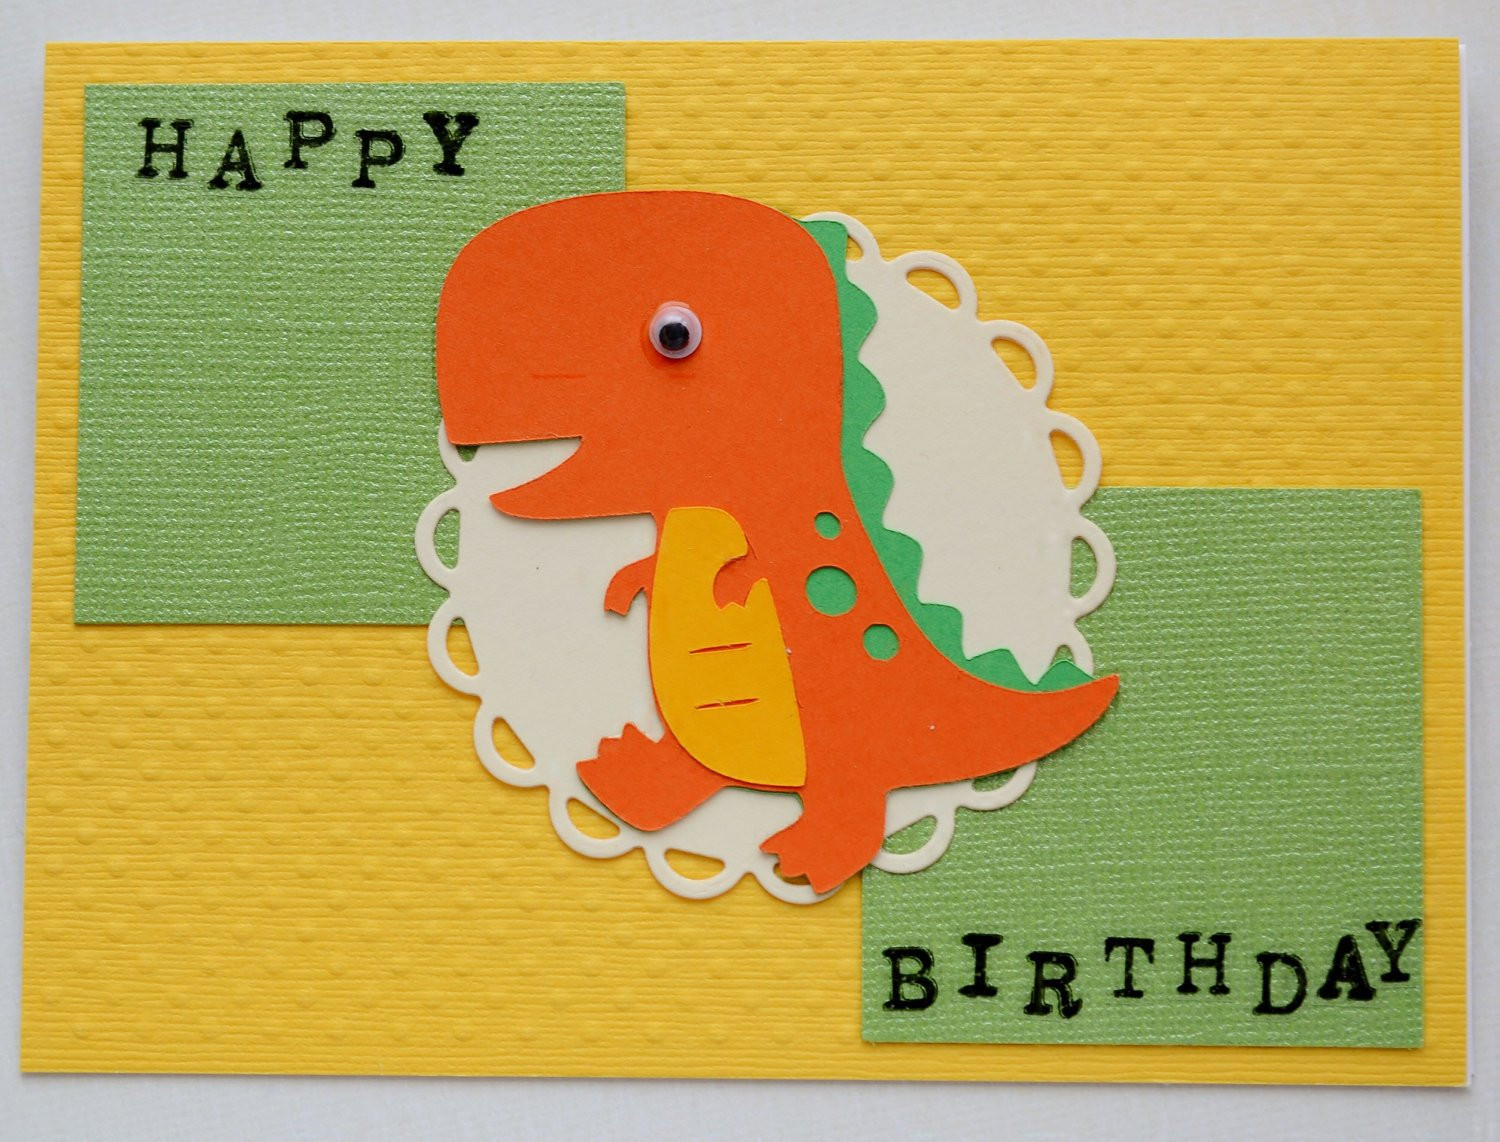 Best ideas about Dinosaur Birthday Card
. Save or Pin Dinosaur Birthday Card Children s Birthday Card Now.